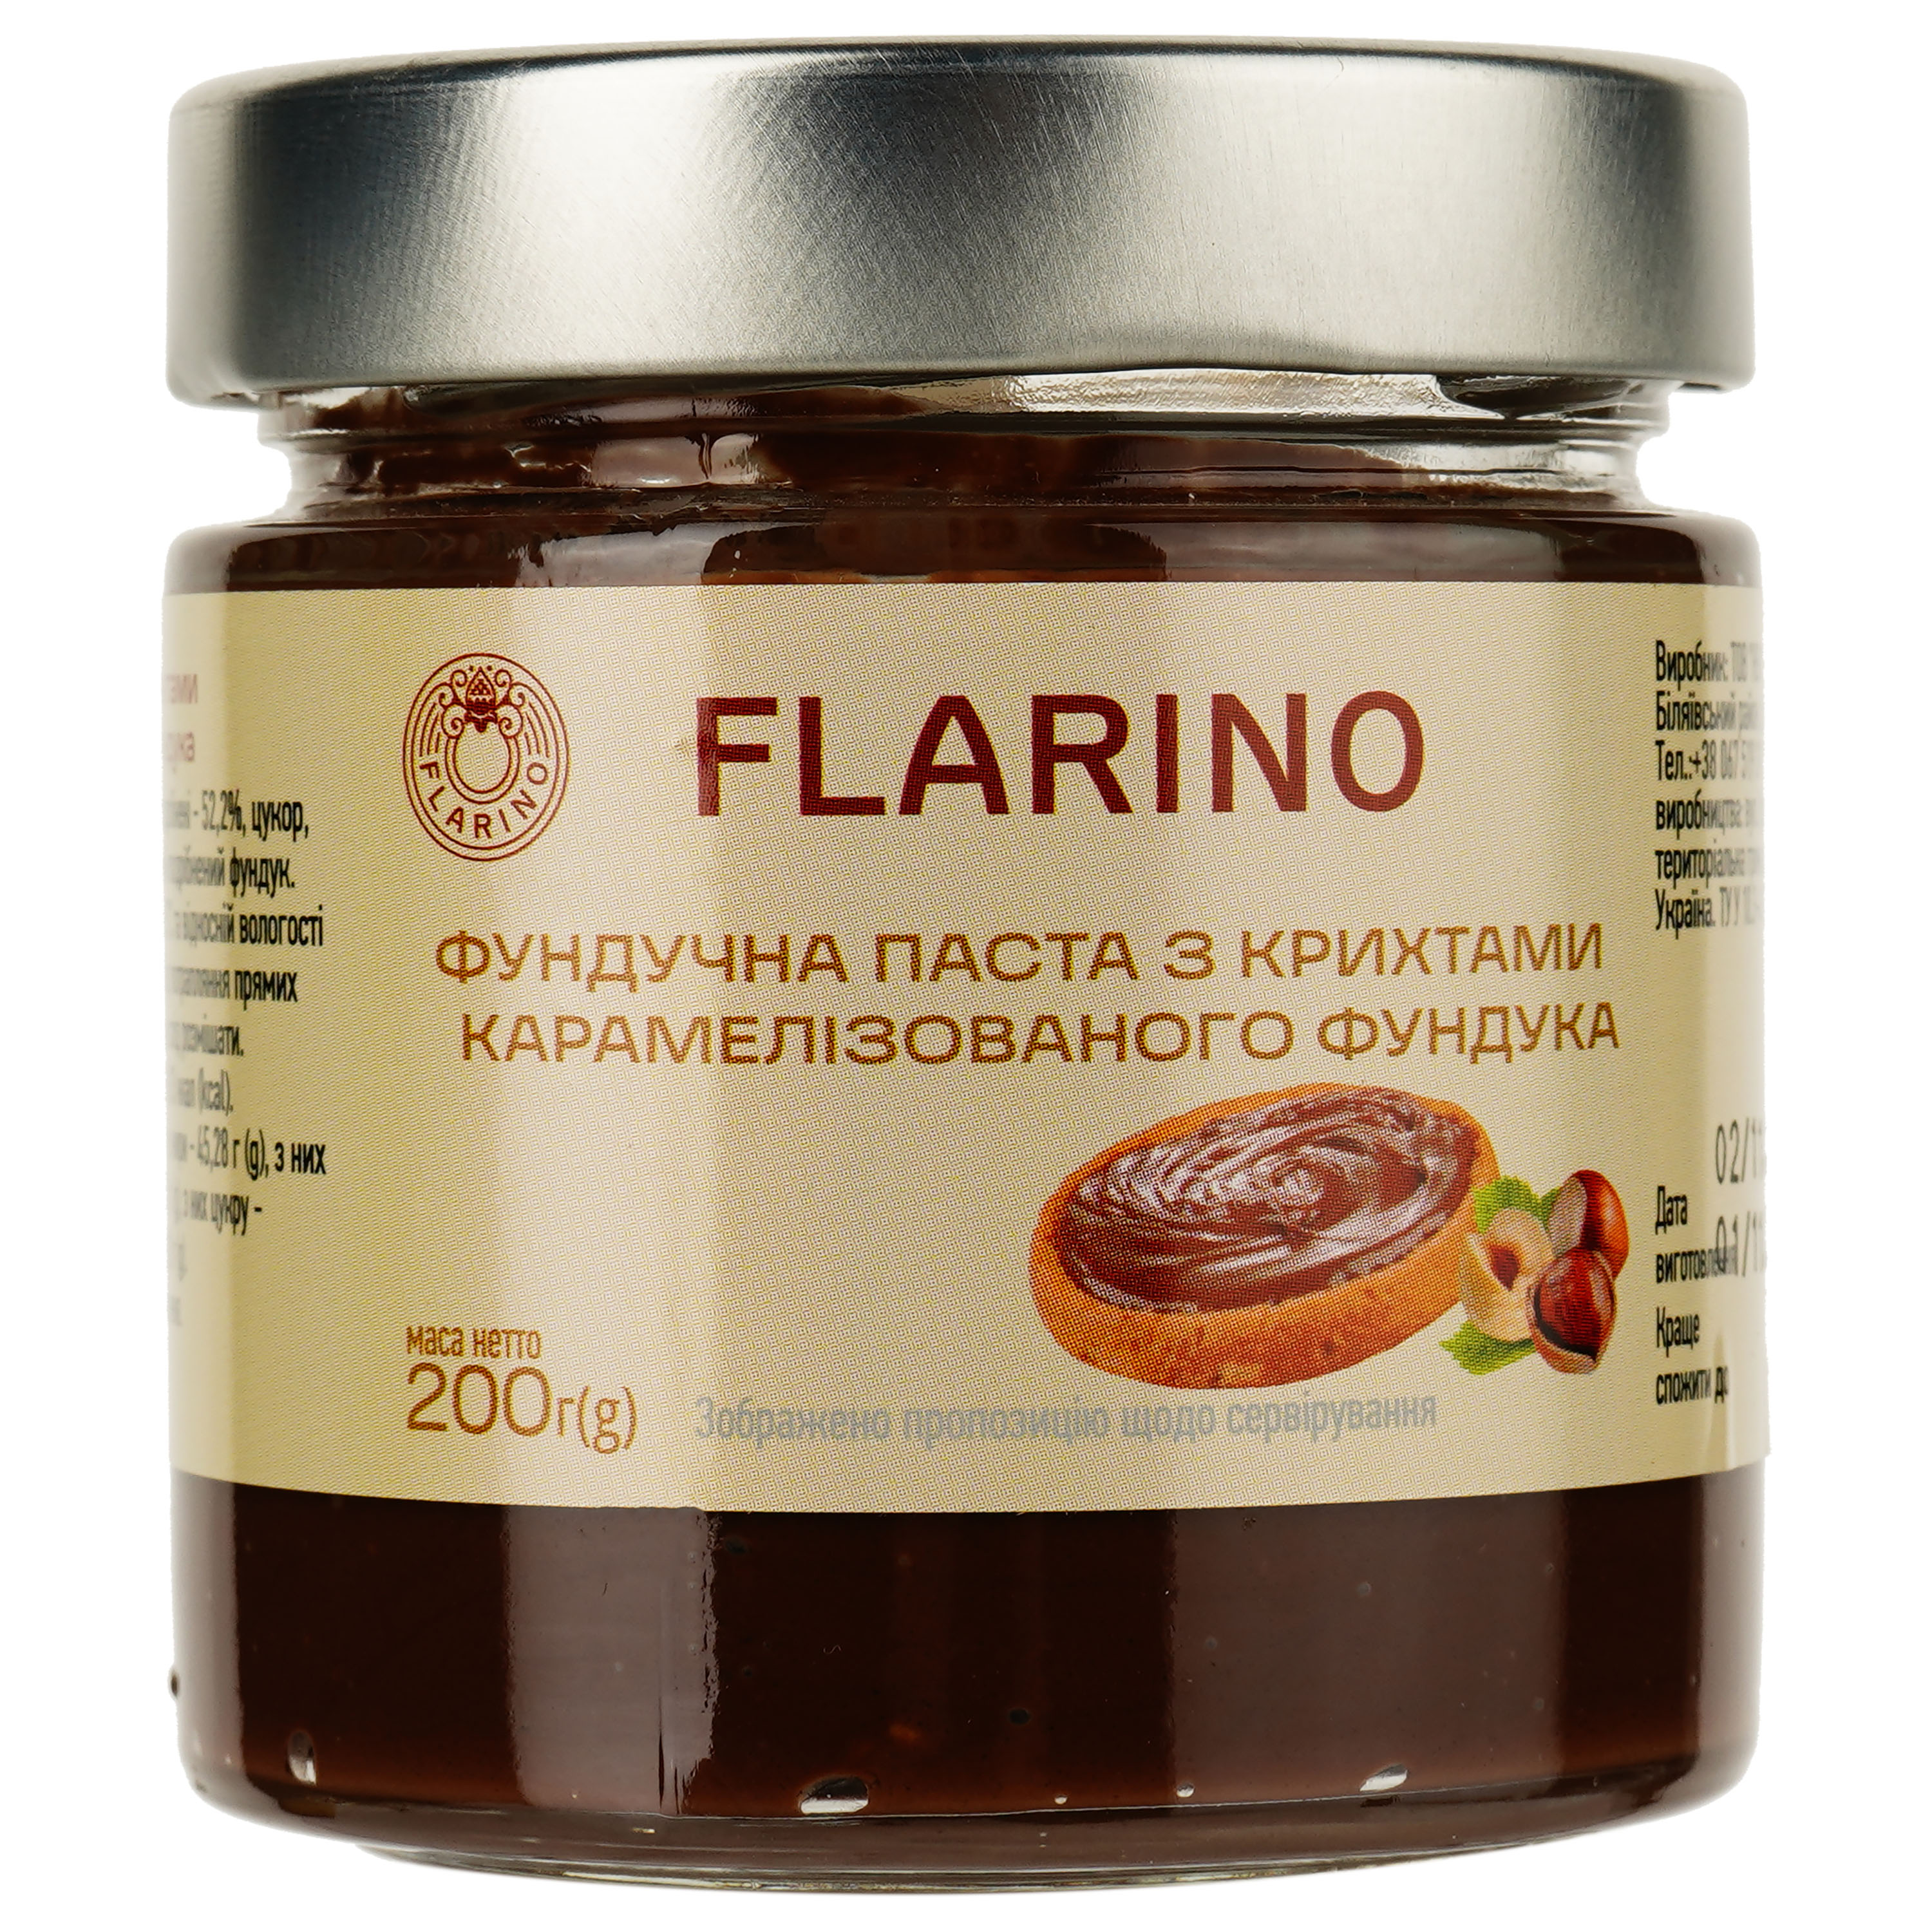 Паста Flarino фундучна Crunch cream 200 г - фото 1